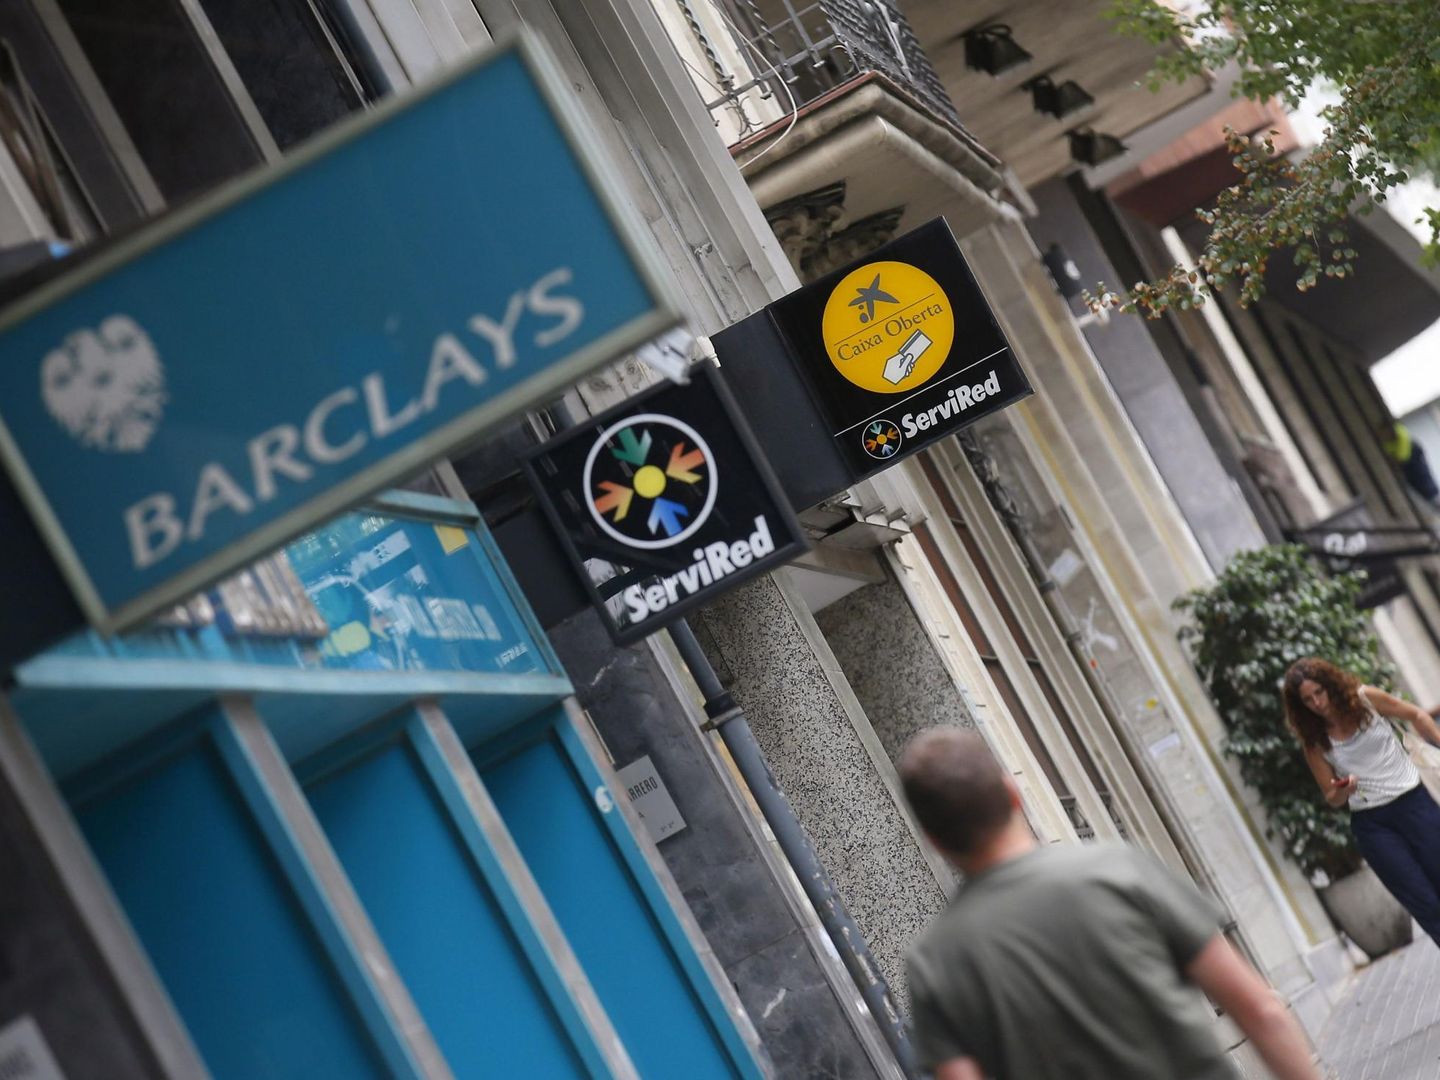 Oficina del antiguo Barclays junto a otra de La Caixa en barcelona. (Reuters)